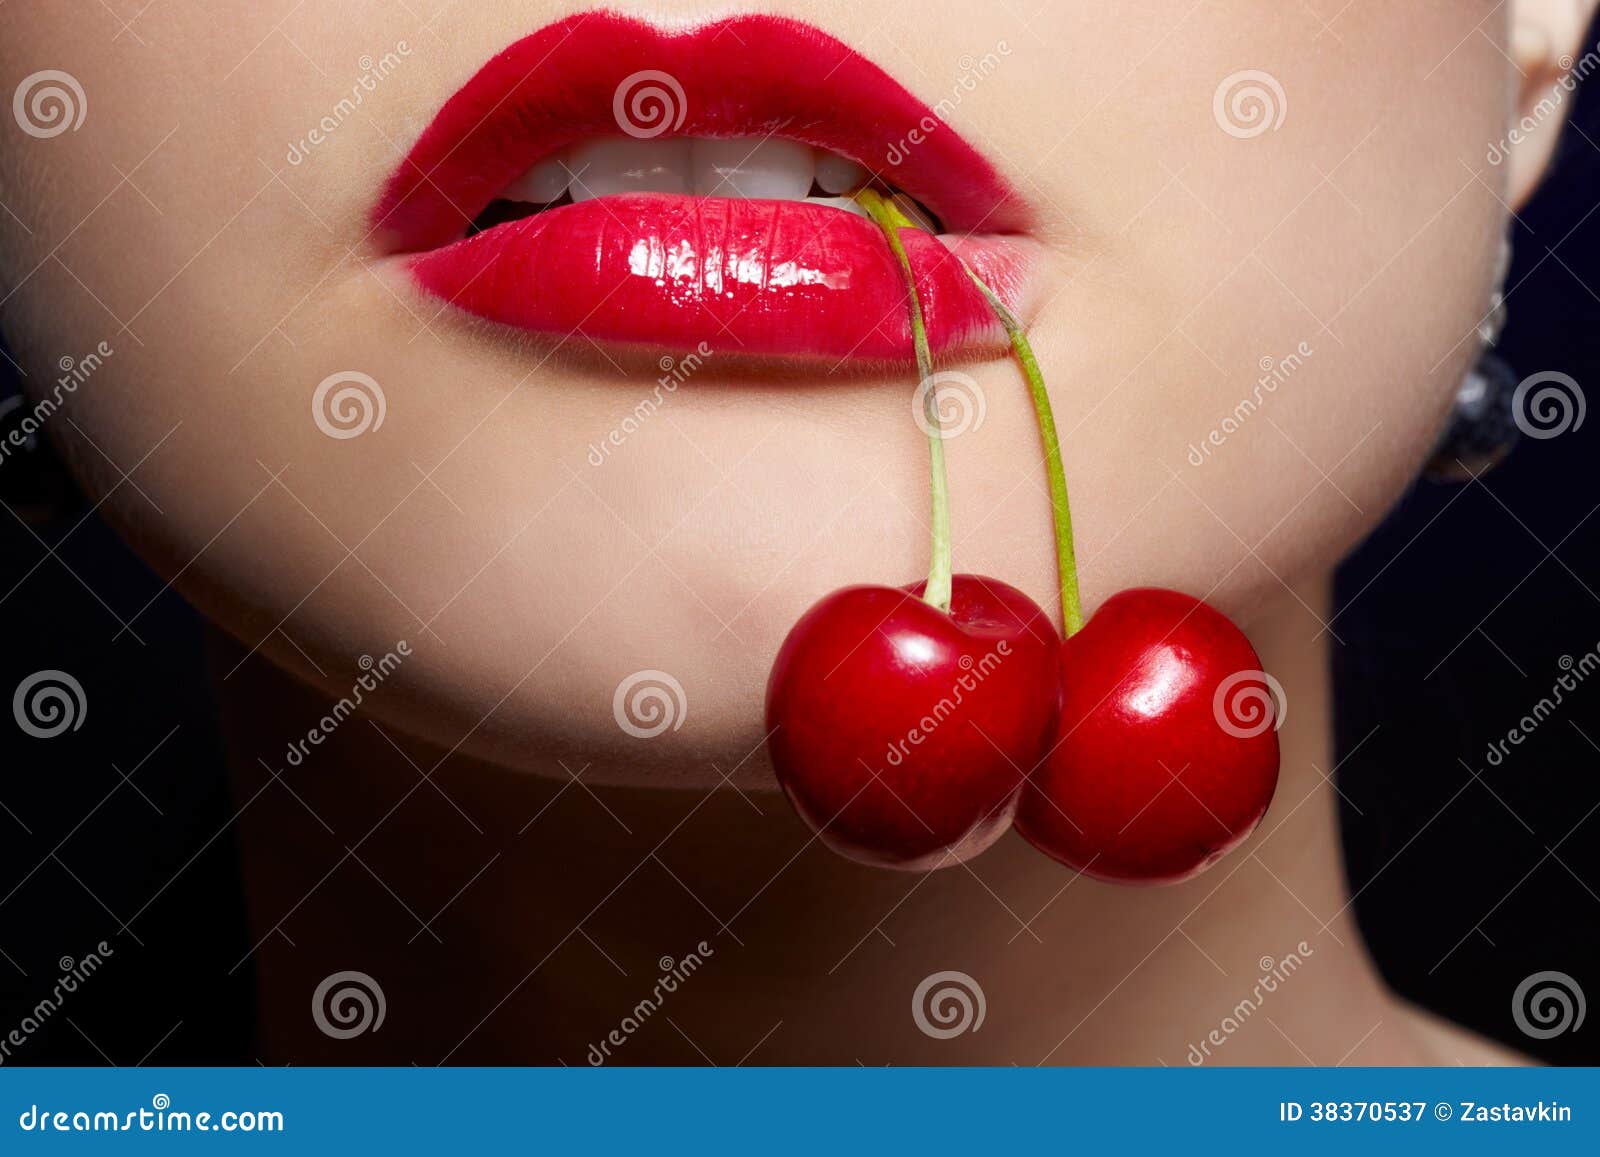 Cherry girl com